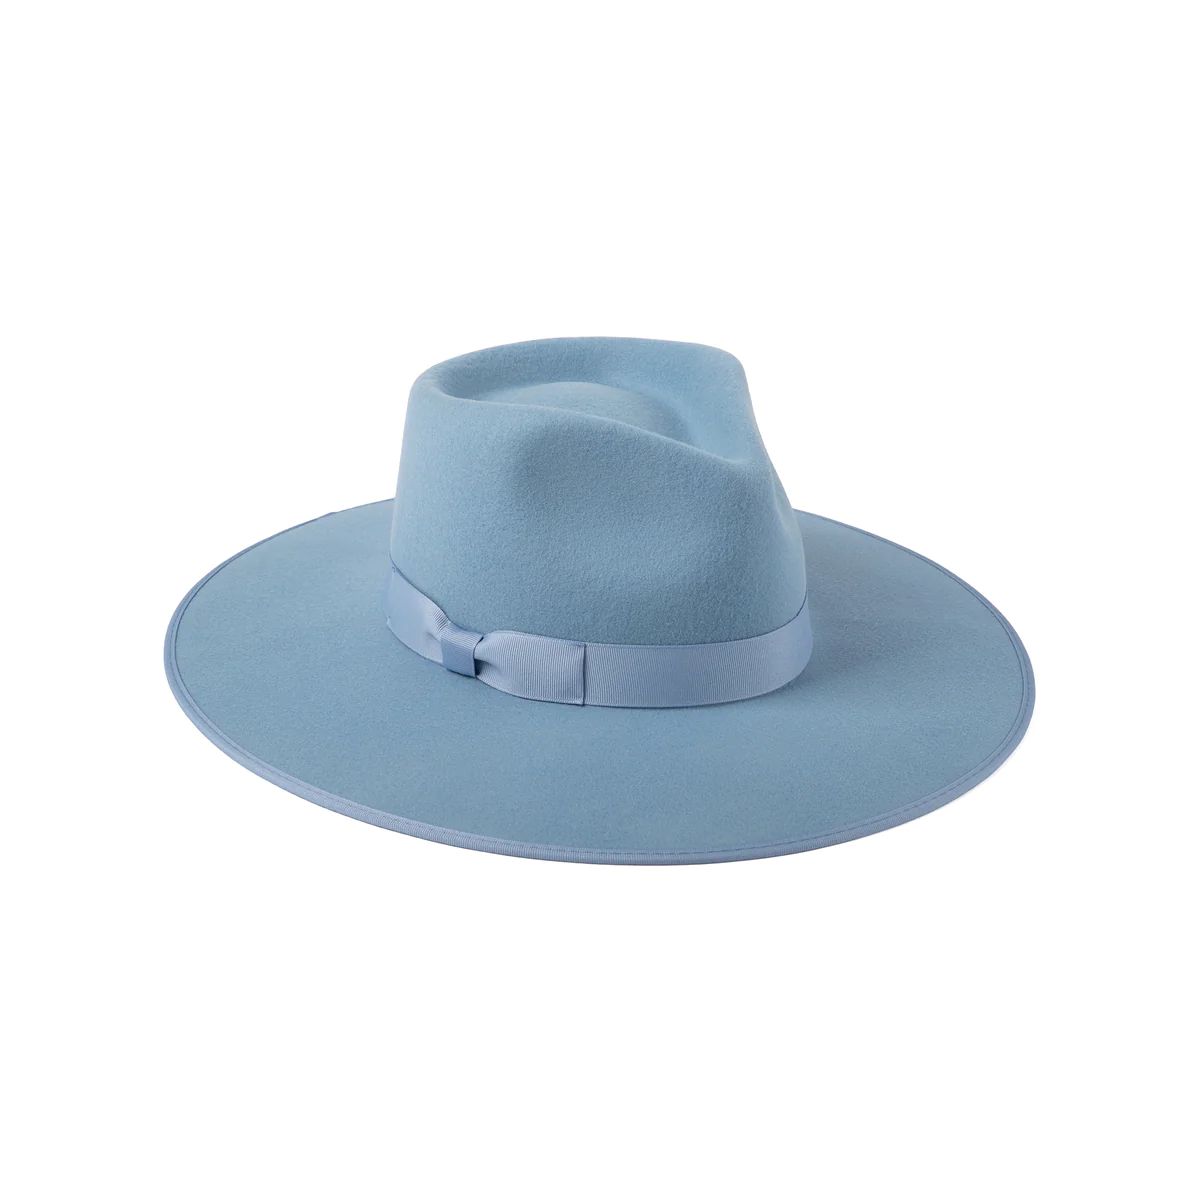 Capri Rancher - Wool Felt Rancher Hat in Blue | Lack of Color US | Lack of Color